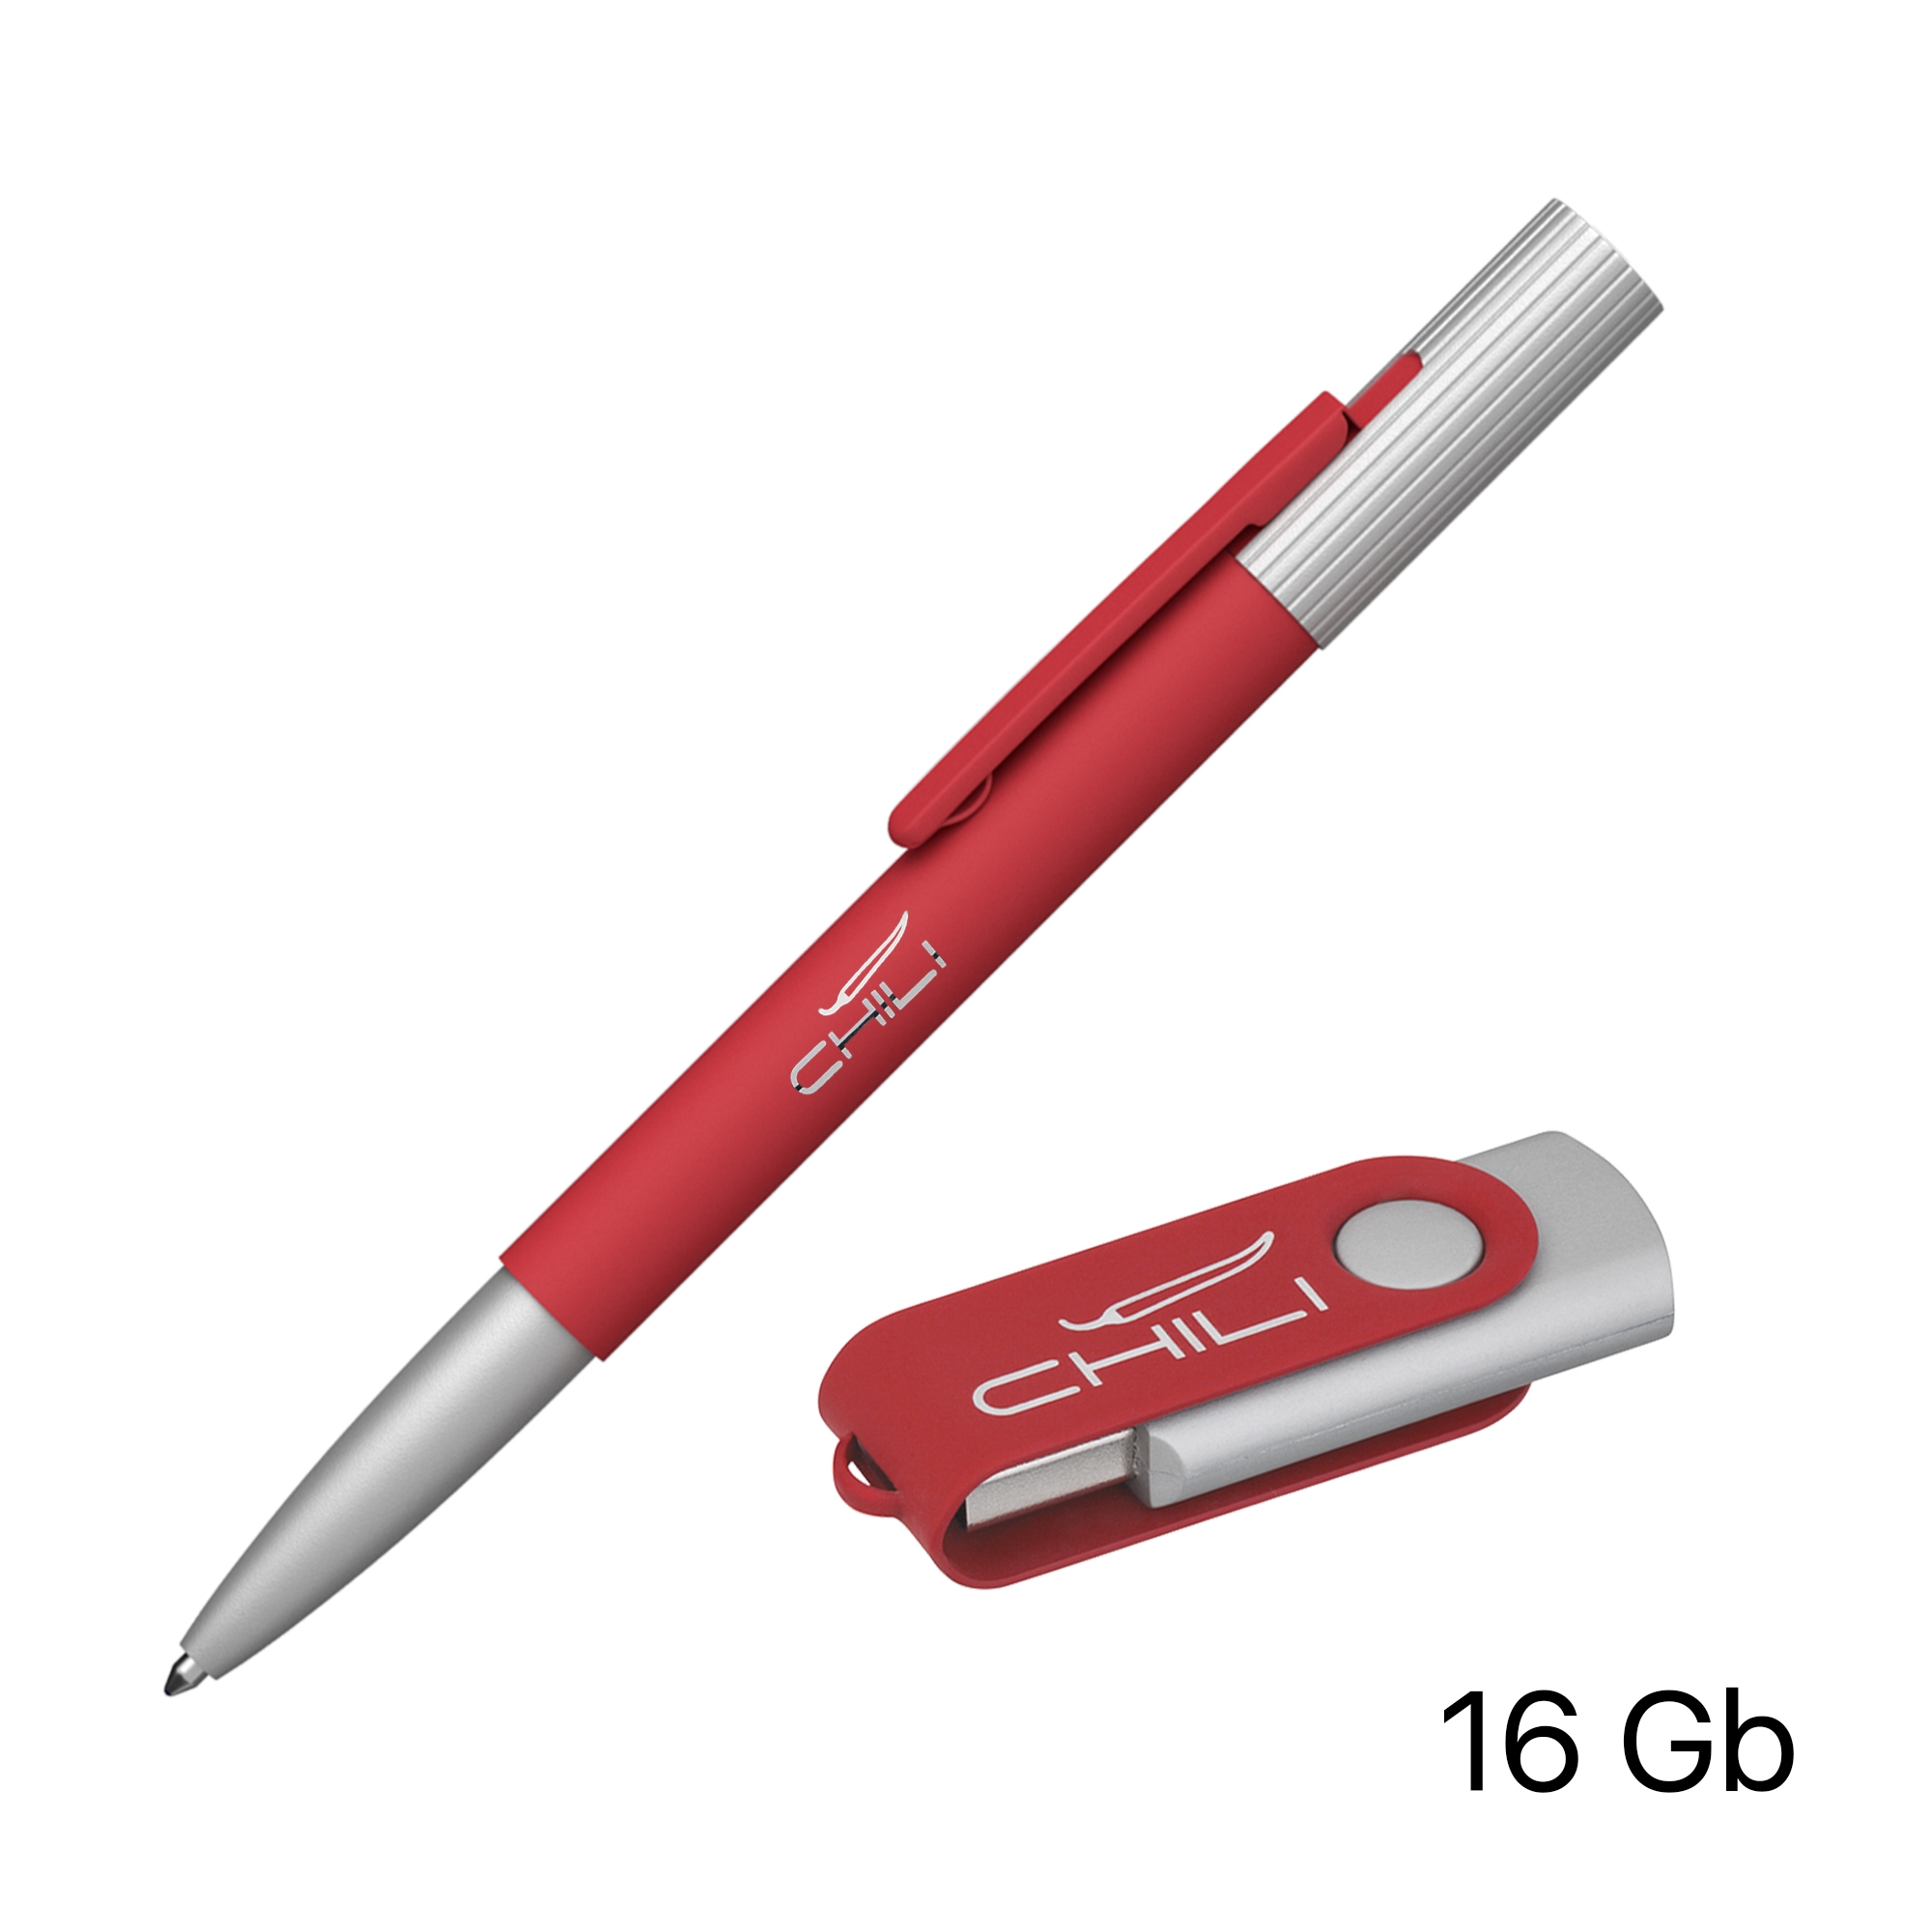 Набор ручка "Clas" + флеш-карта "Vostok" 16 Гб в футляре, покрытие soft touch, красный, металл/пластик/soft touch